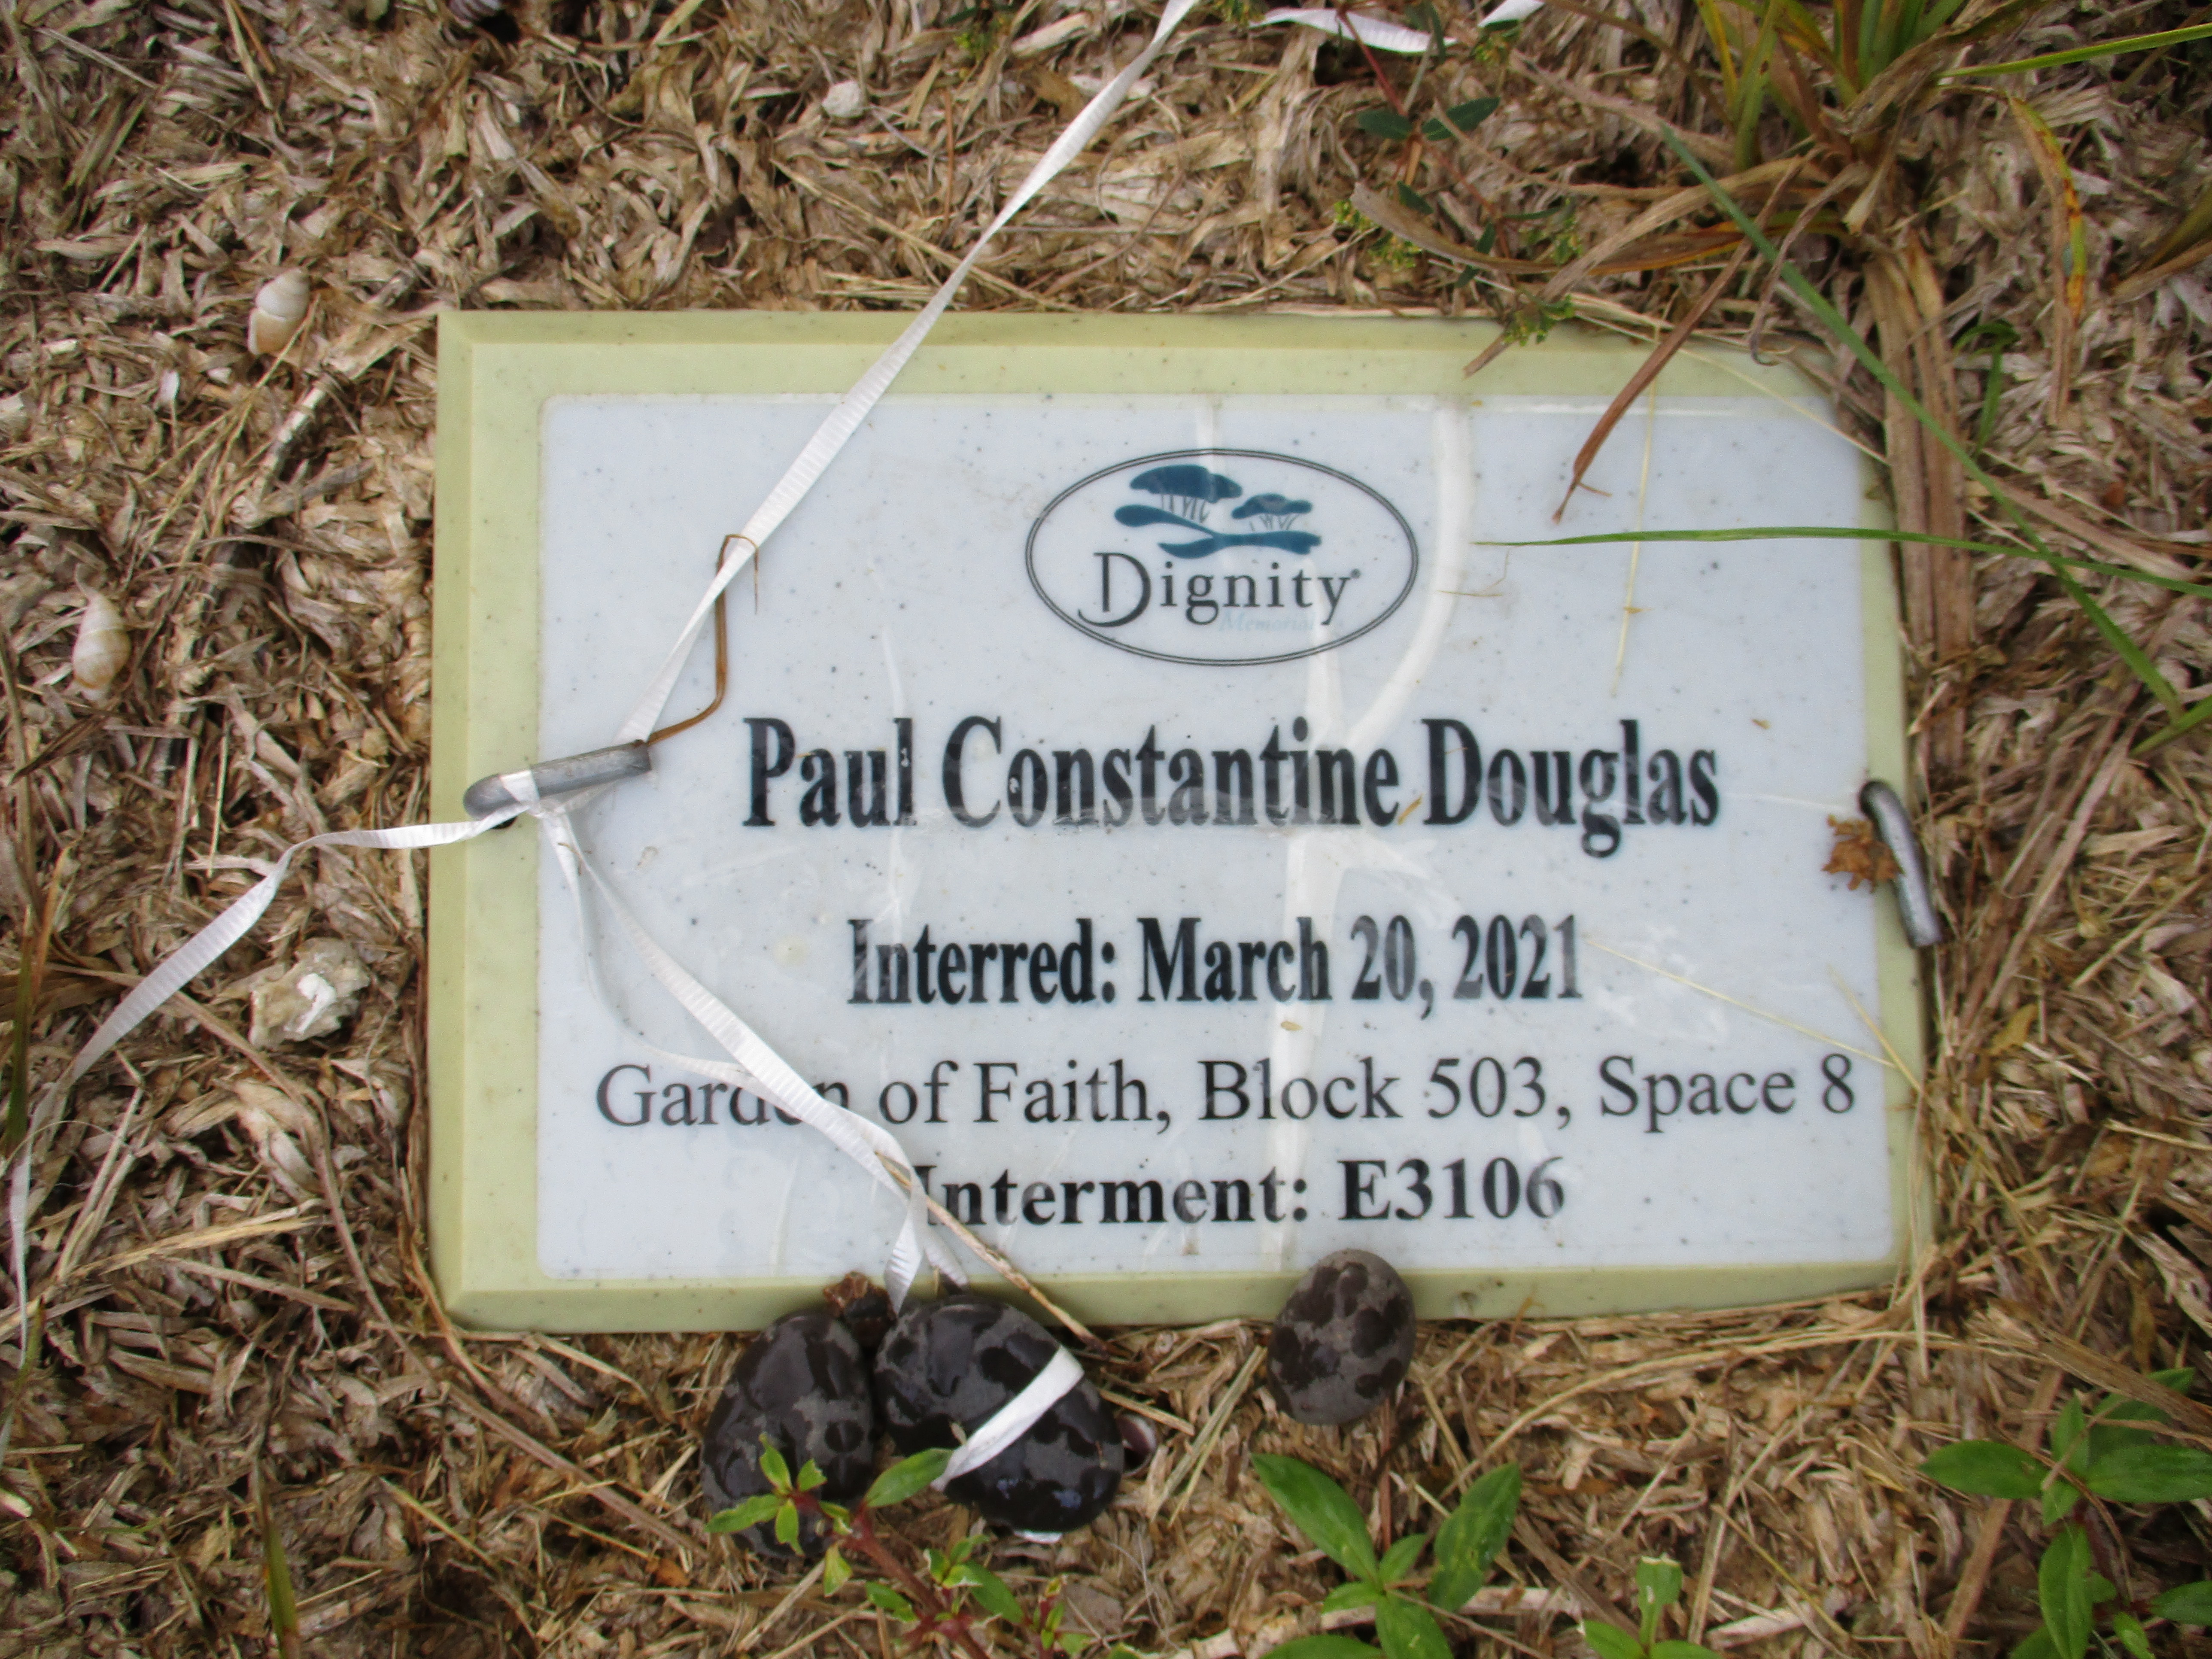 Paul Constantine Douglas